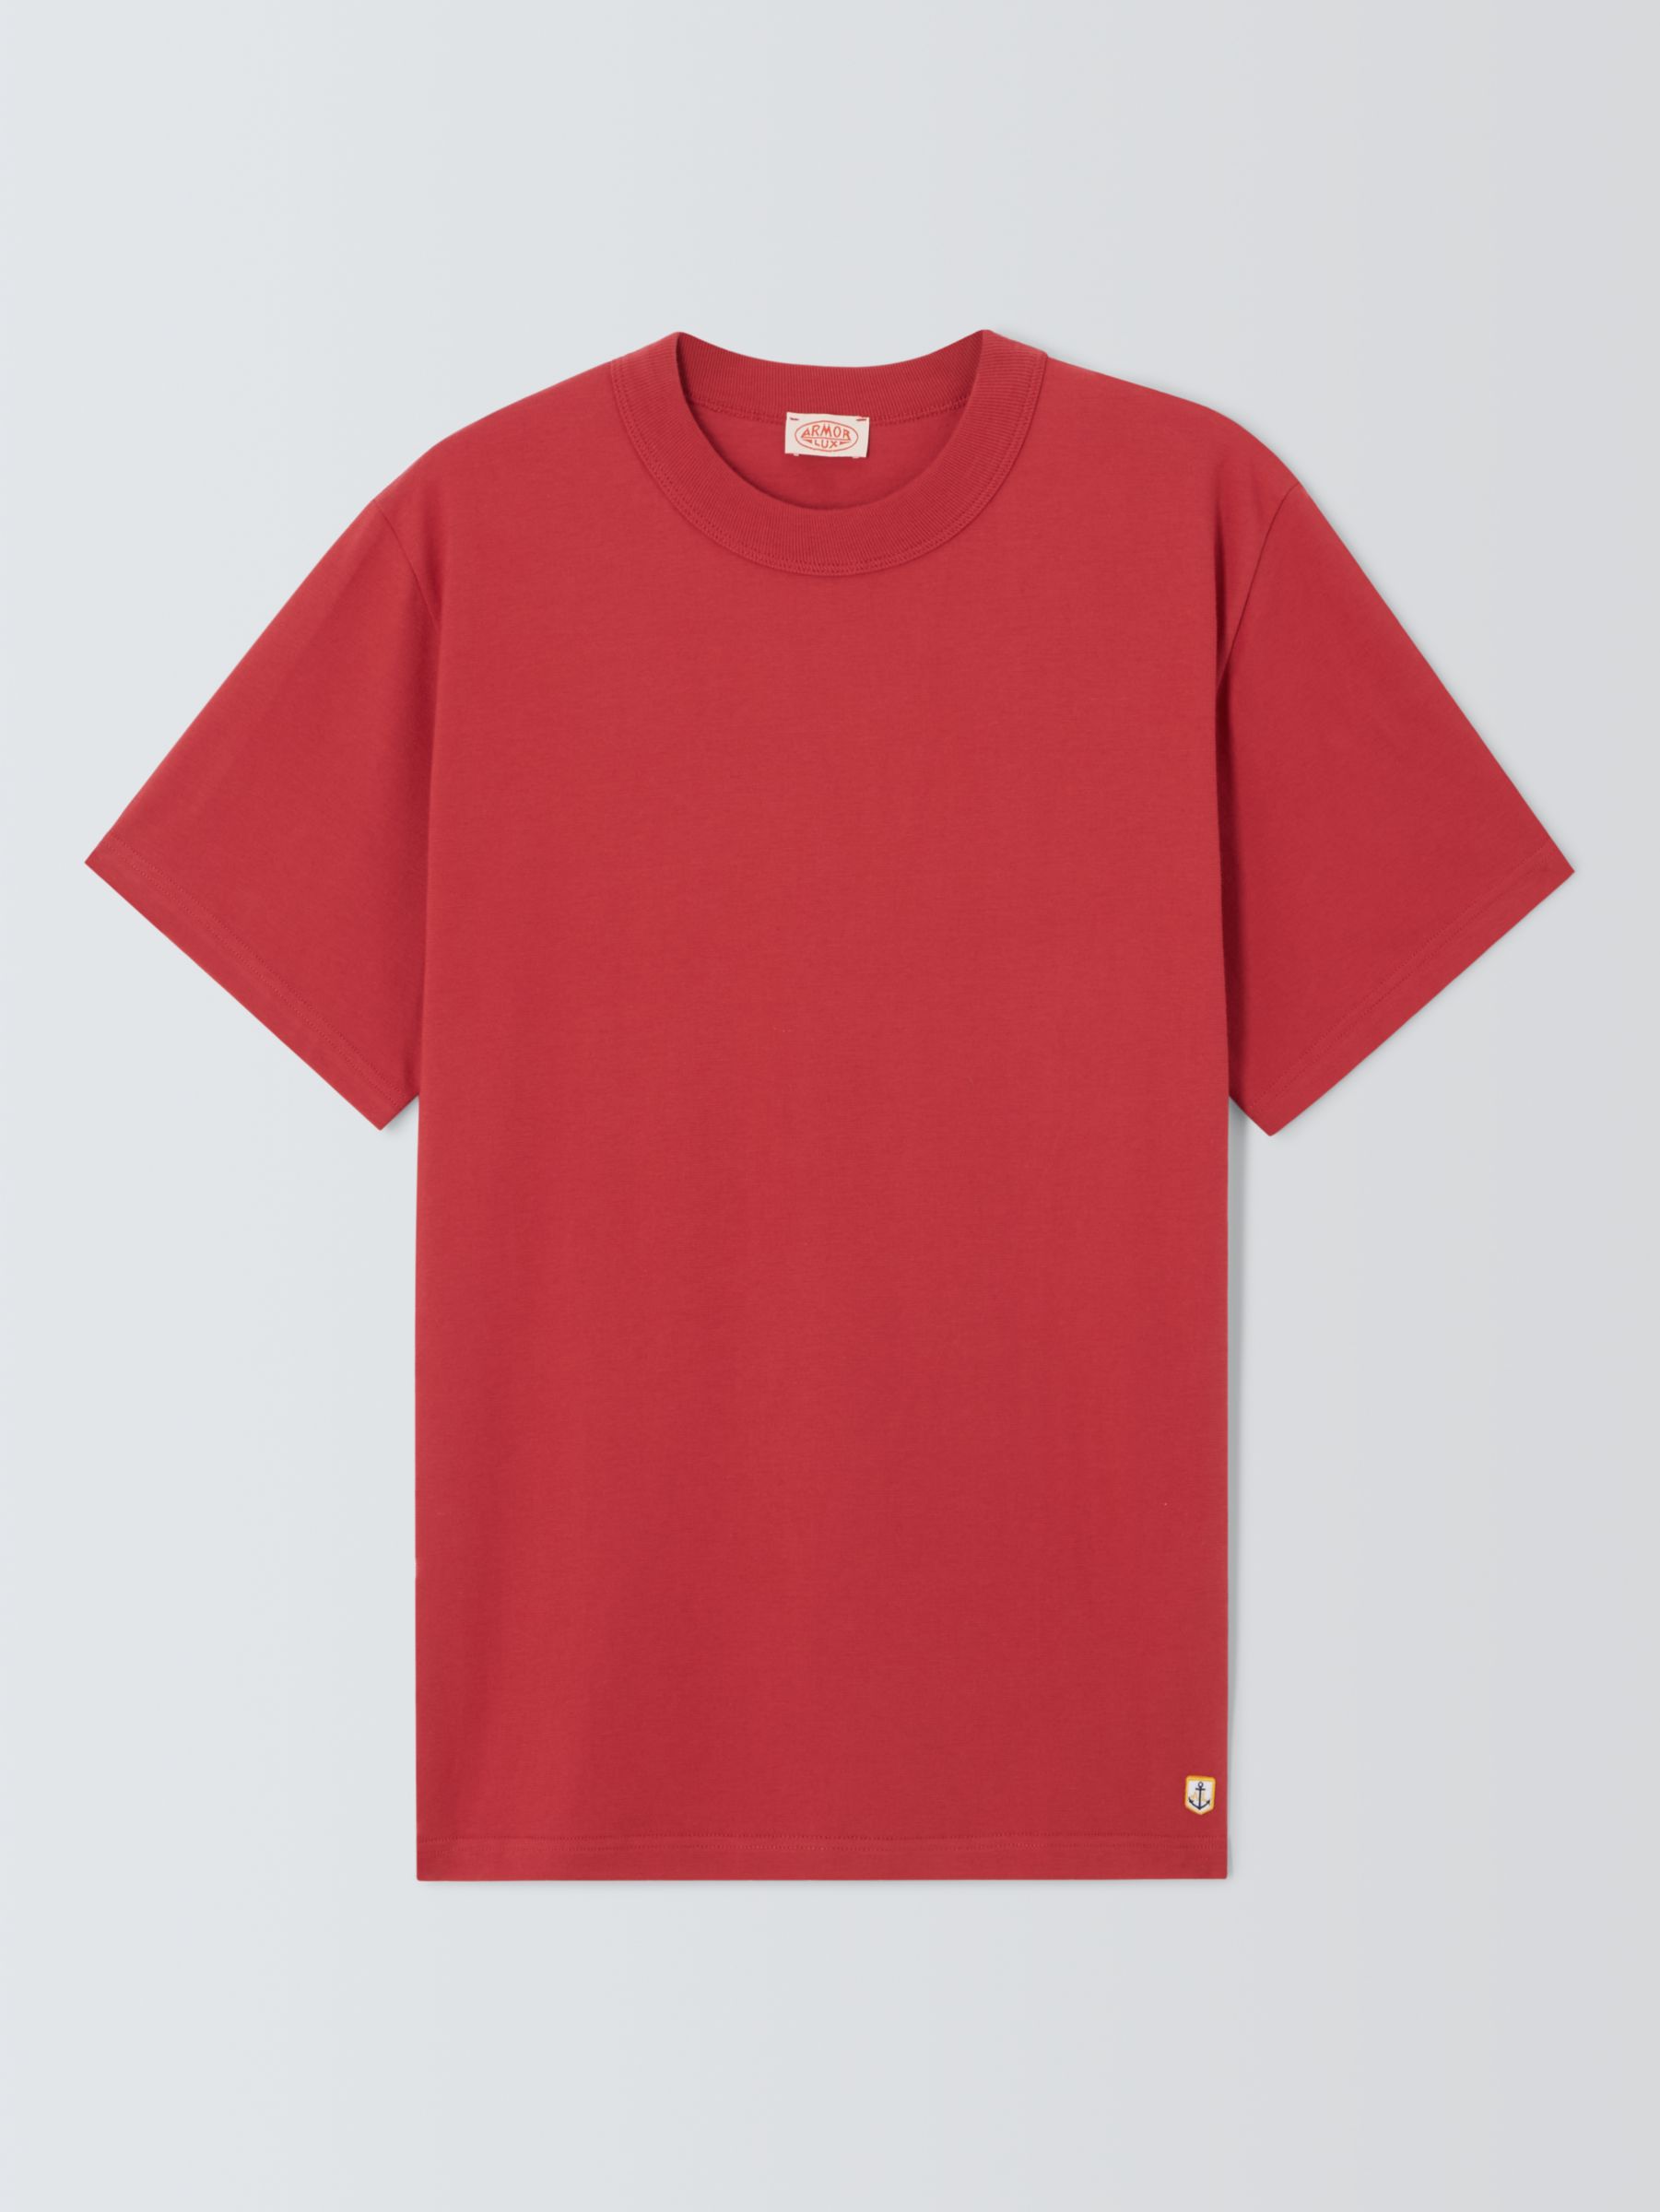 Armor Lux Heritage Cotton Crew Neck T-Shirt, Cardinal, S